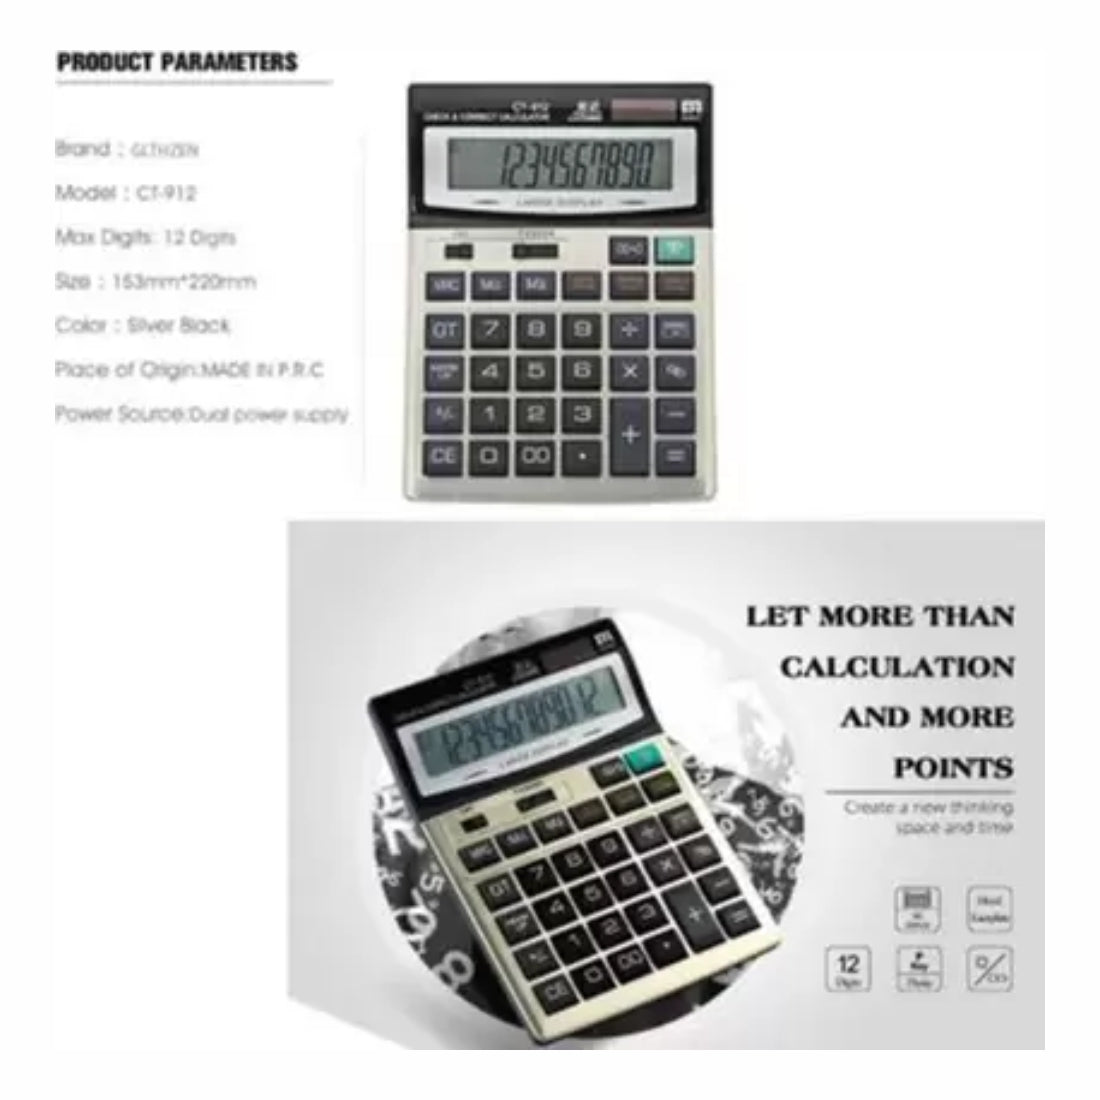 Citllzen CT-912 Electronic Calculator